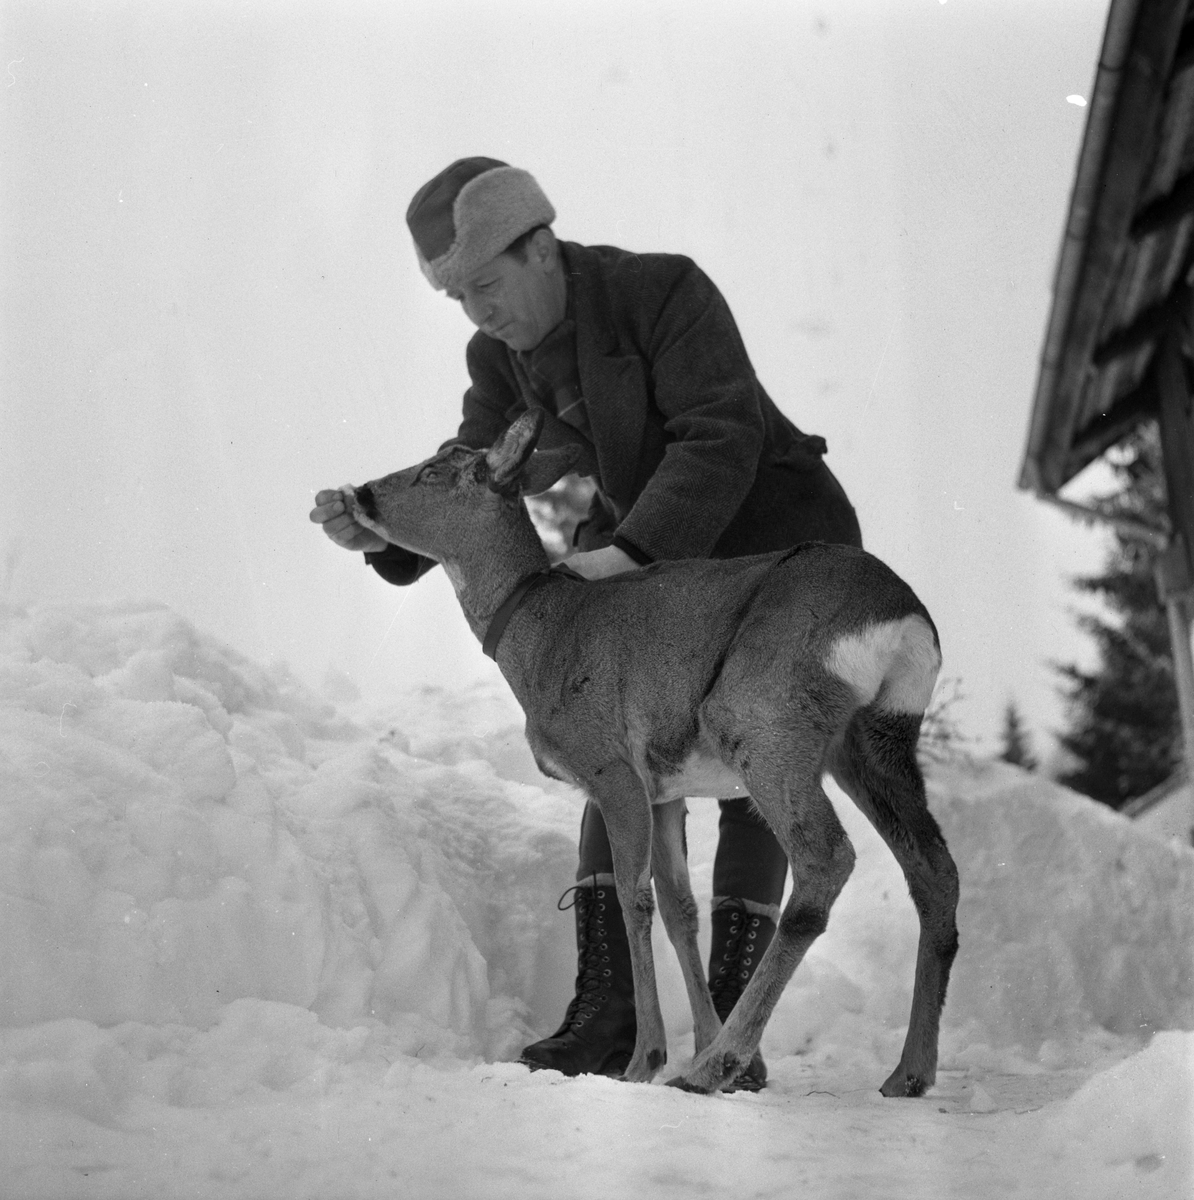 Rådjur i Ramshyttan. 
13 februari 1959.